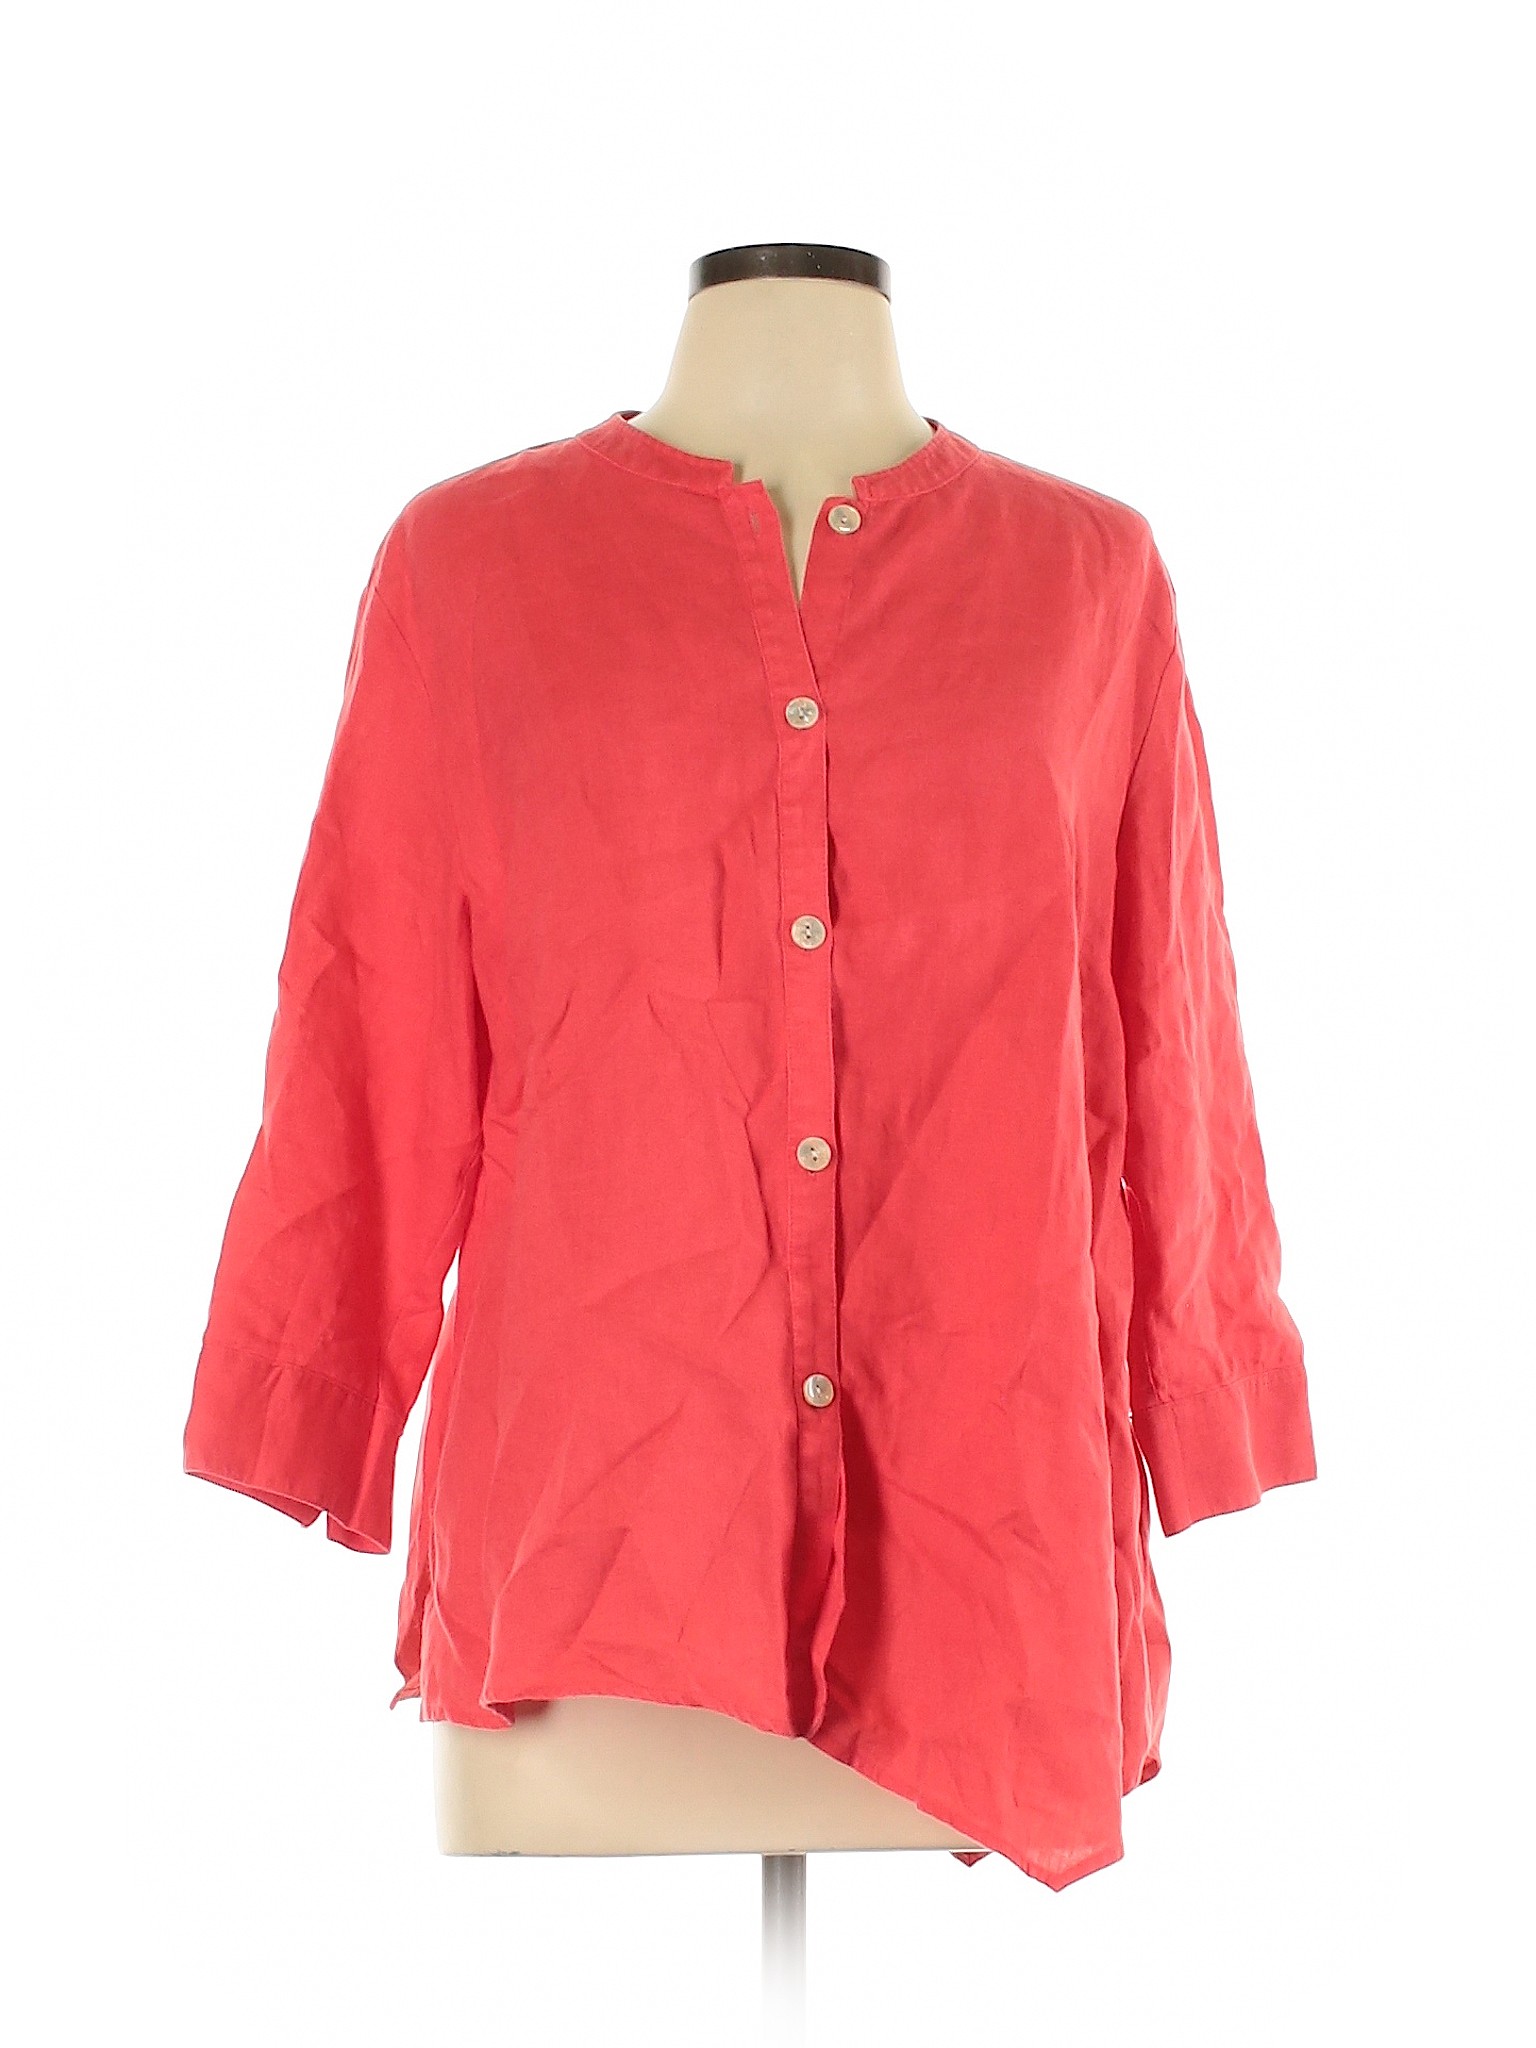 Jones New York Sport Women Red 3/4 Sleeve Blouse L | eBay